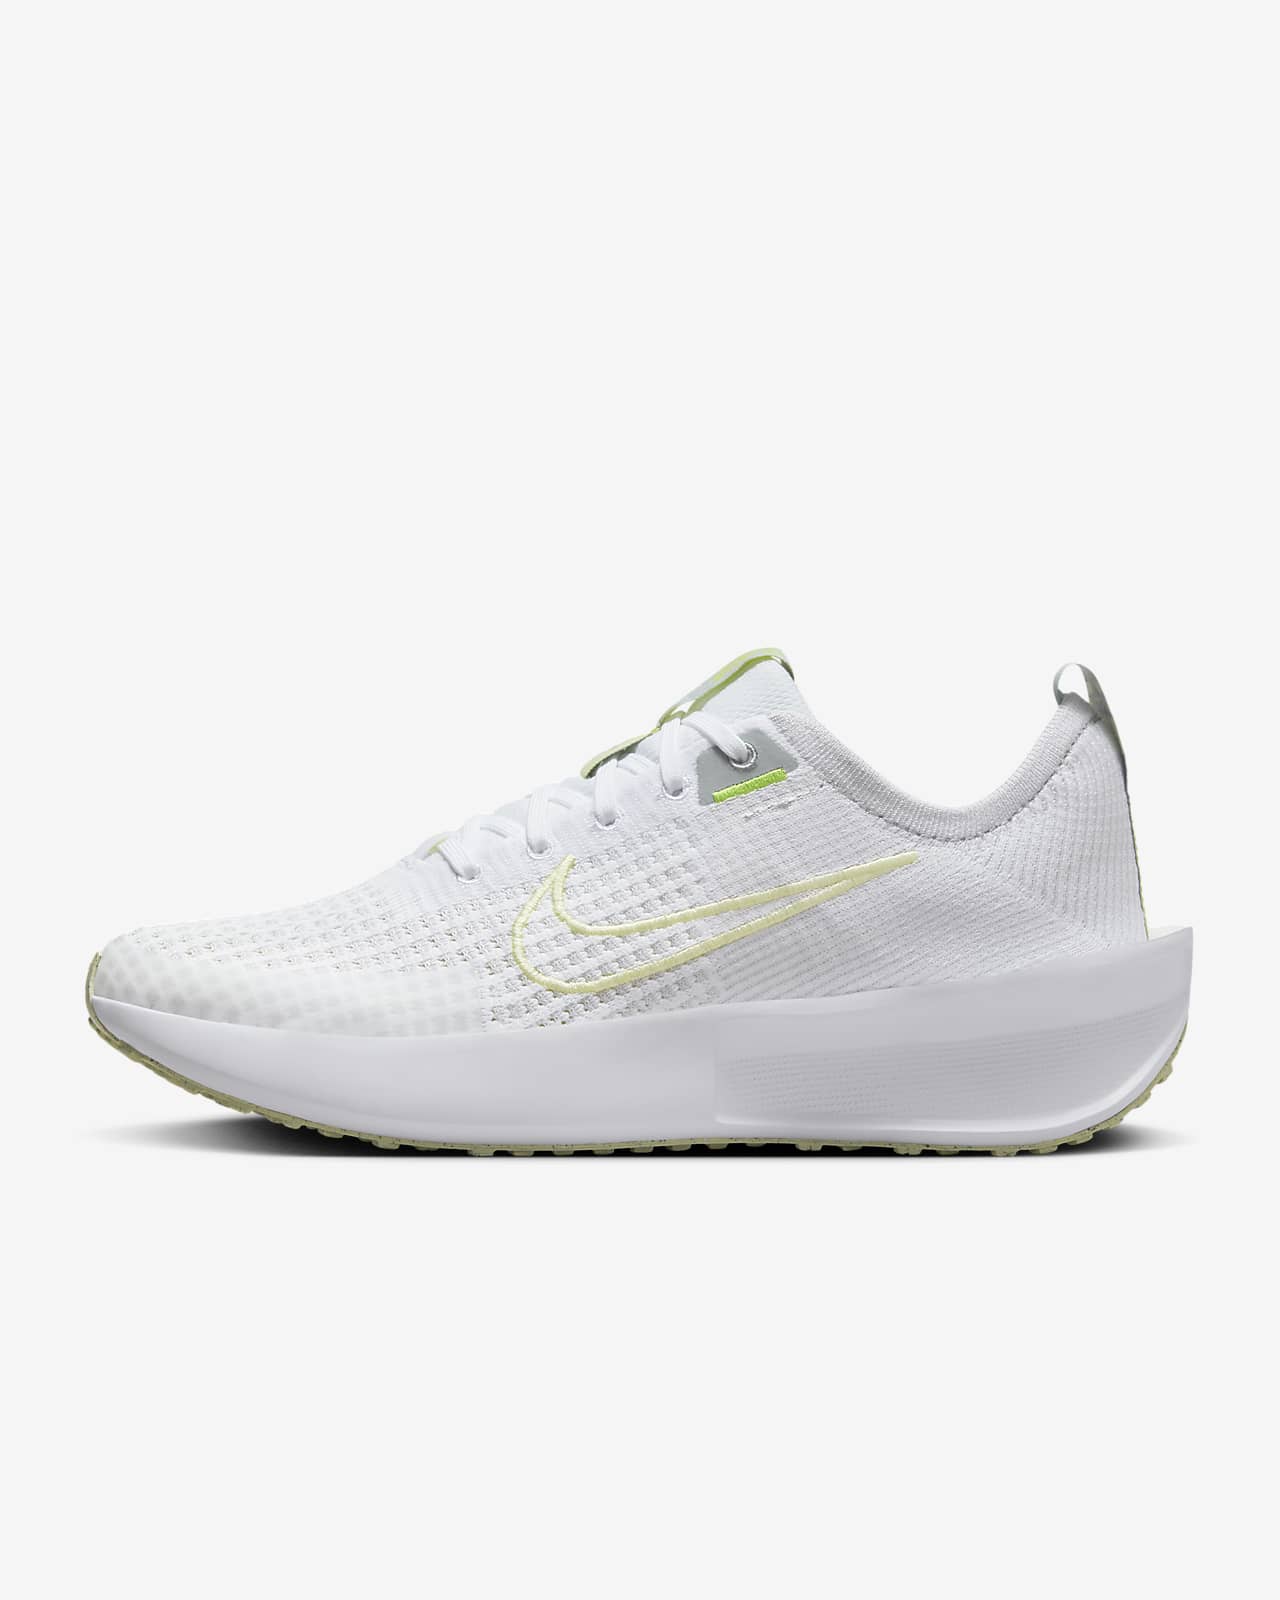 Chaussure de running sur route Nike Interact Run pour femme